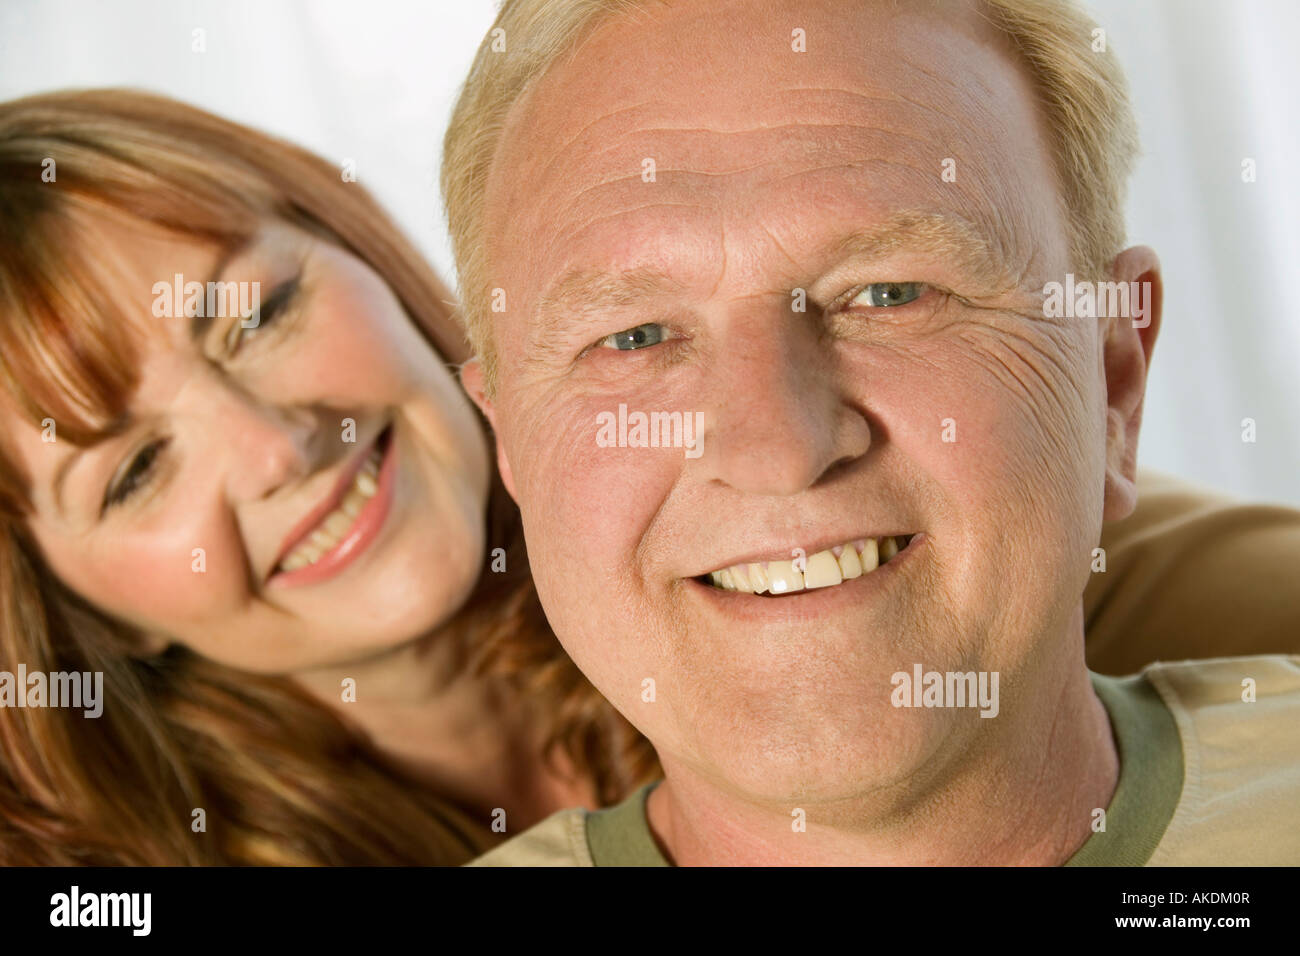 Portrait of a couple Stock Photo